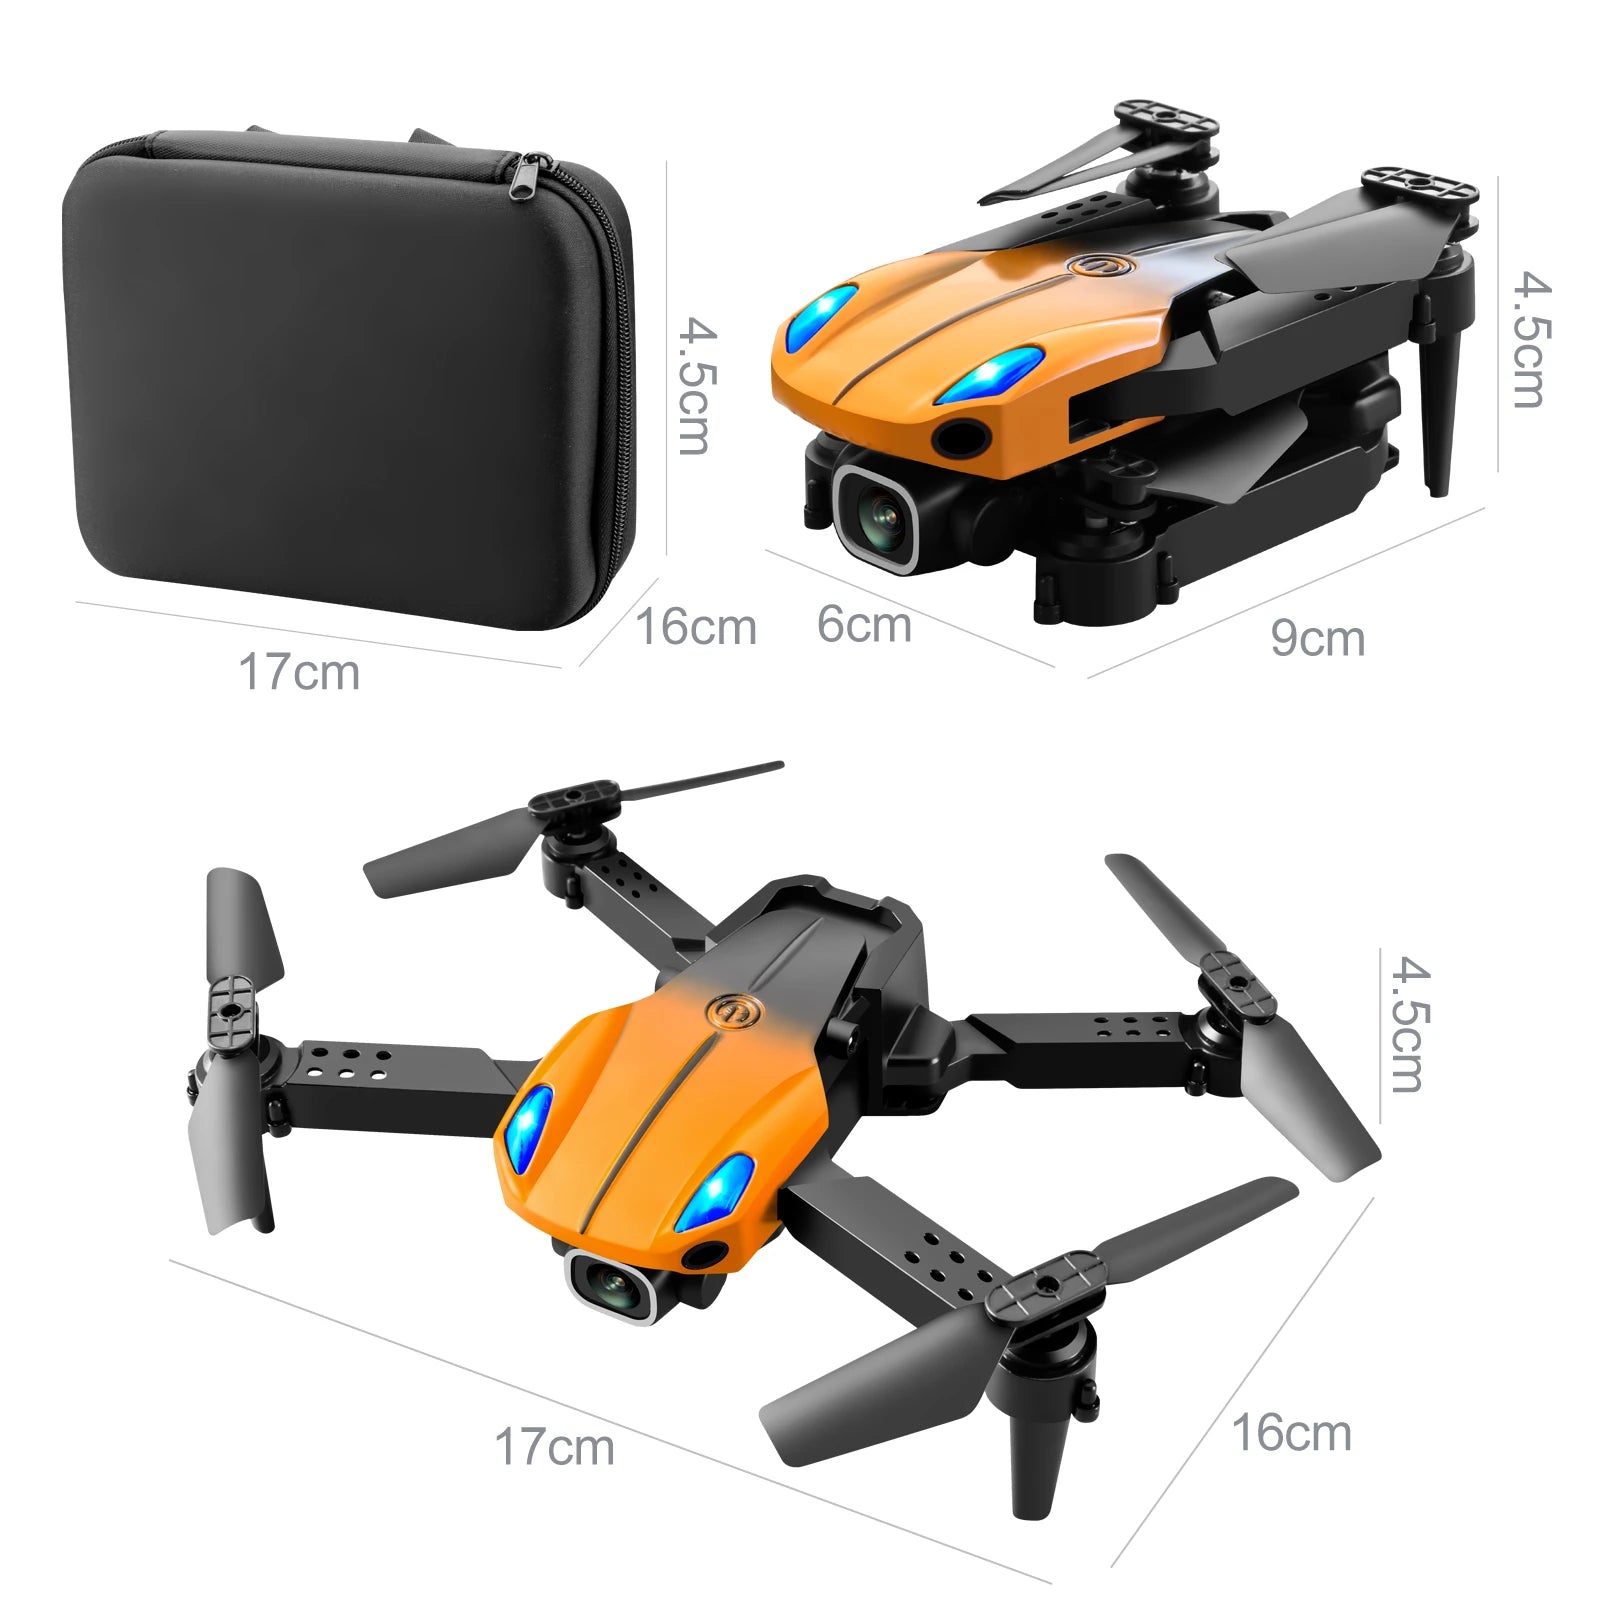 kbdfa ky907 mini drone features 